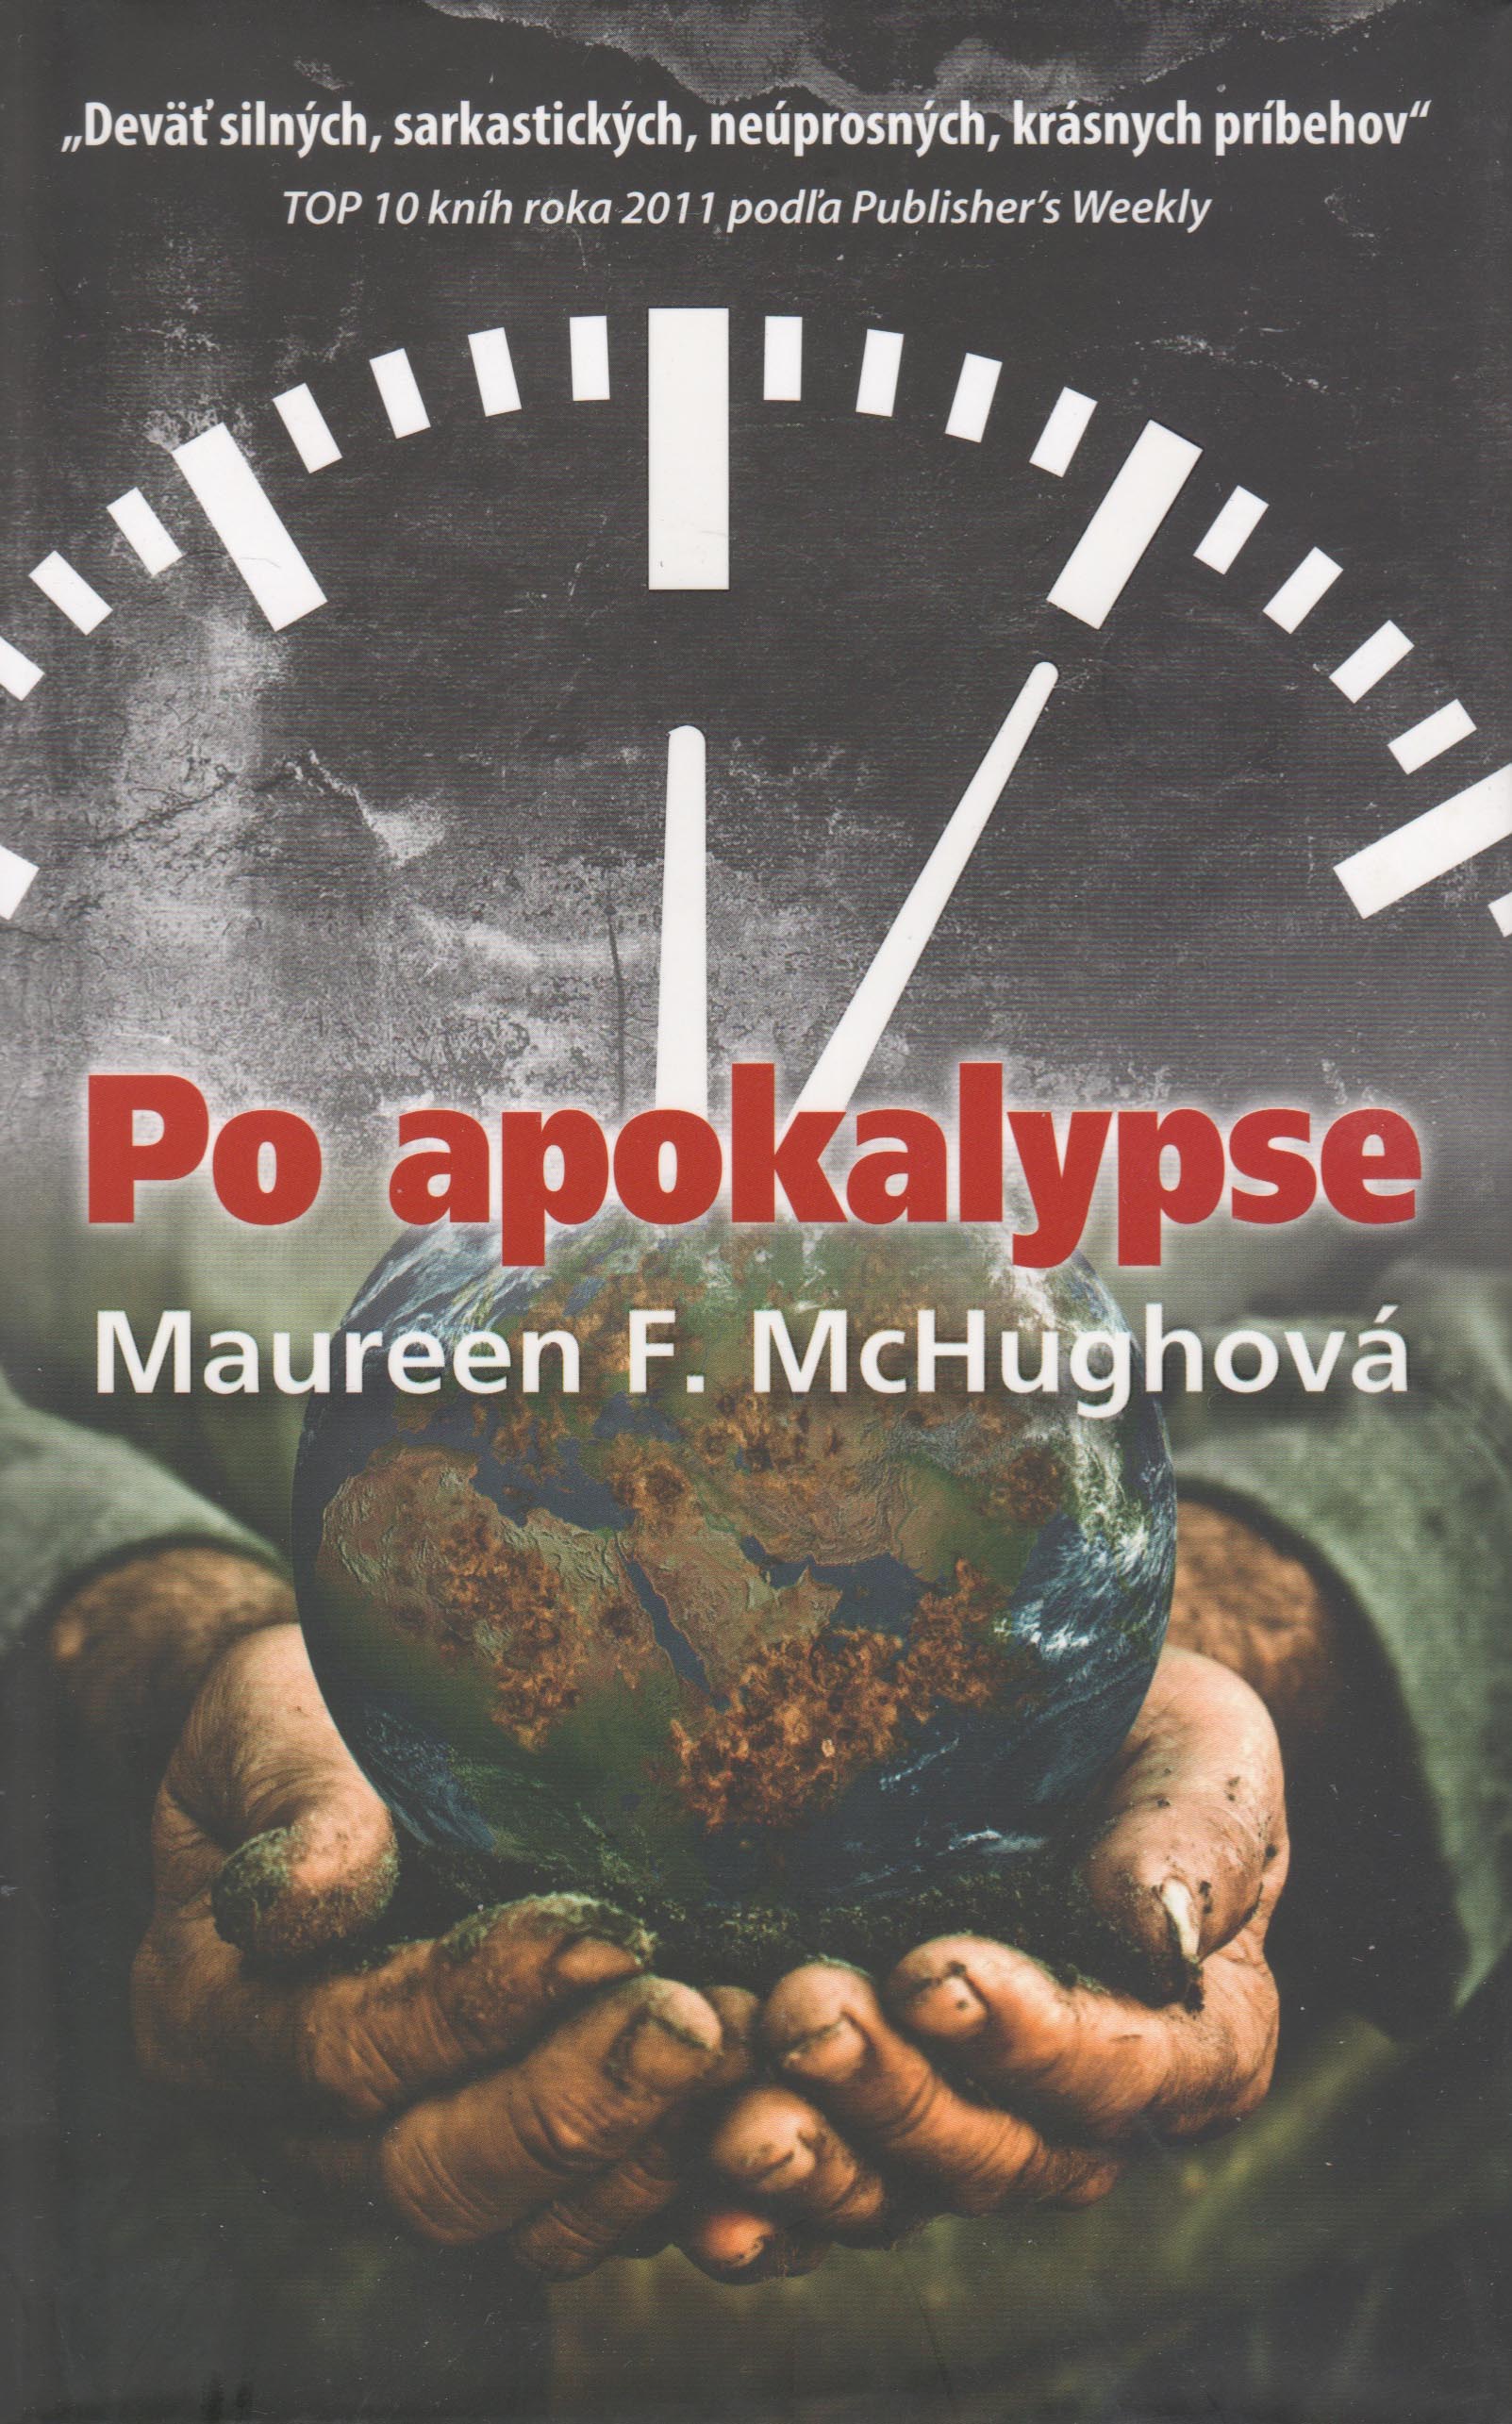 Po apokalypse (Maureen F. McHughová)